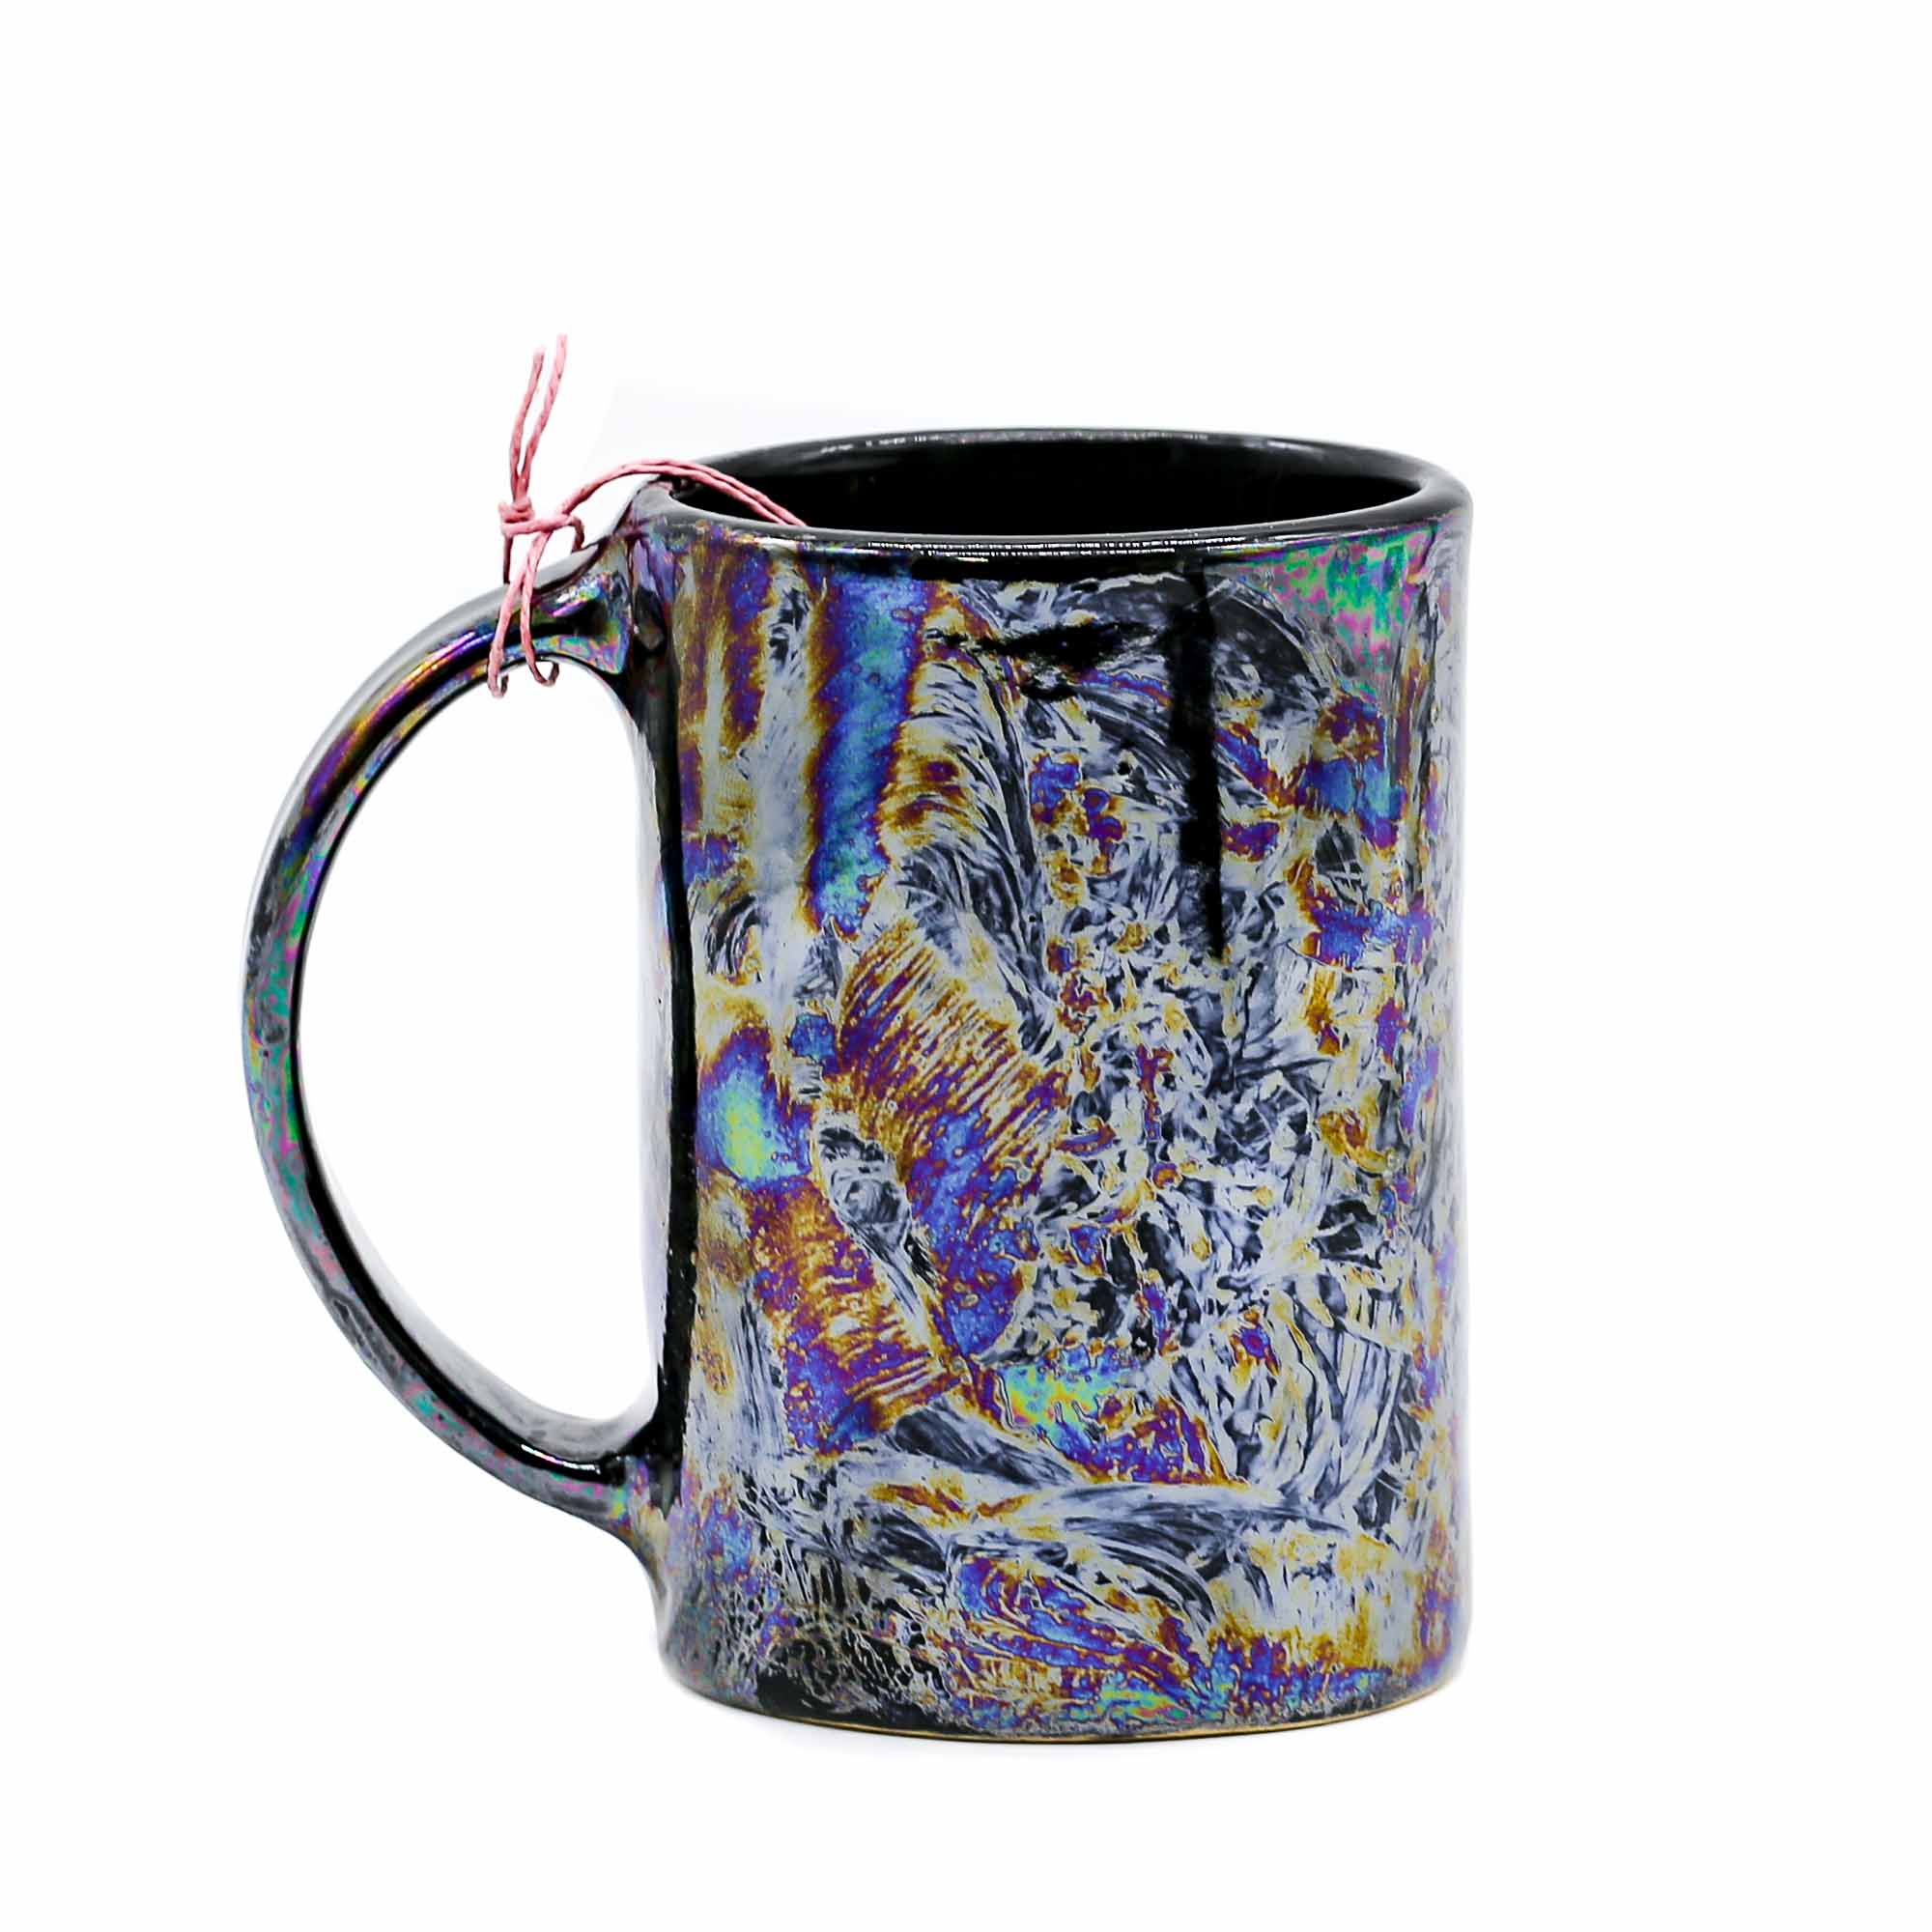 Wildfire Ceramics - Oil Slick Mug #16 - Mortise And Tenon